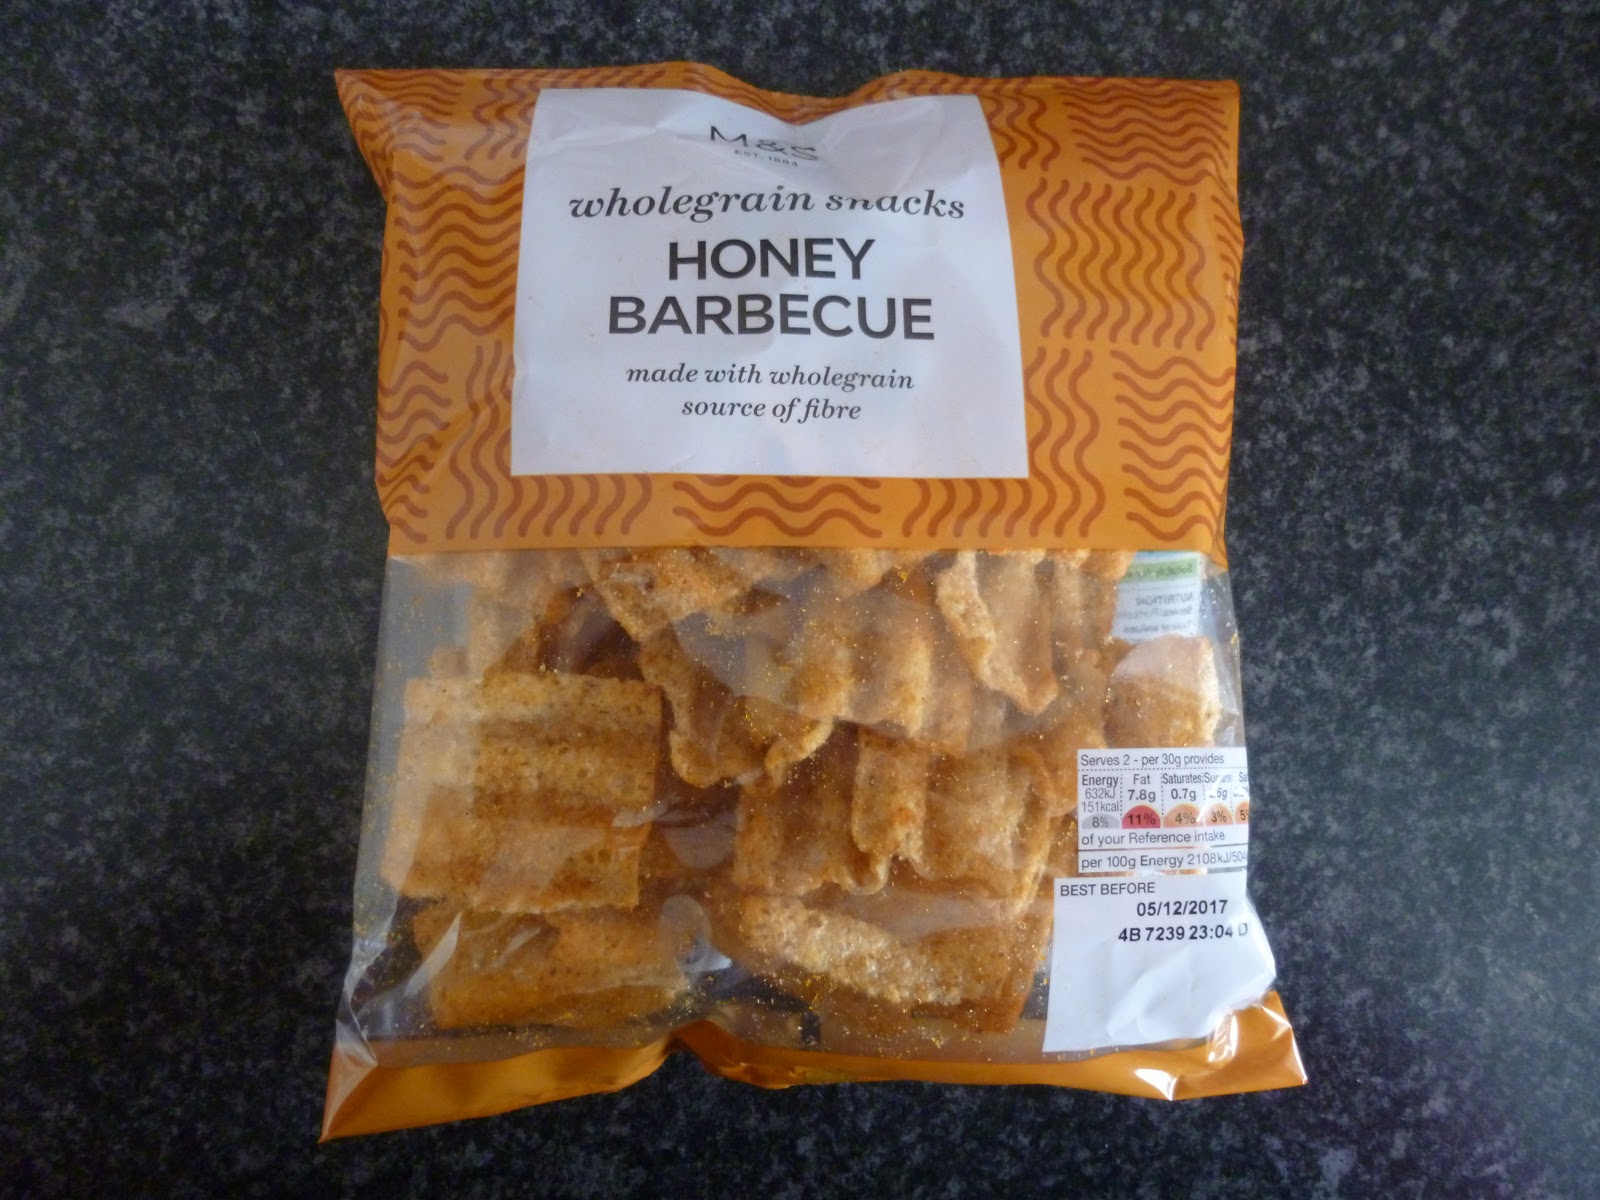 Marks & Spencer Food Reviews: M&S Honey Barbecue Wholegrain Snacks